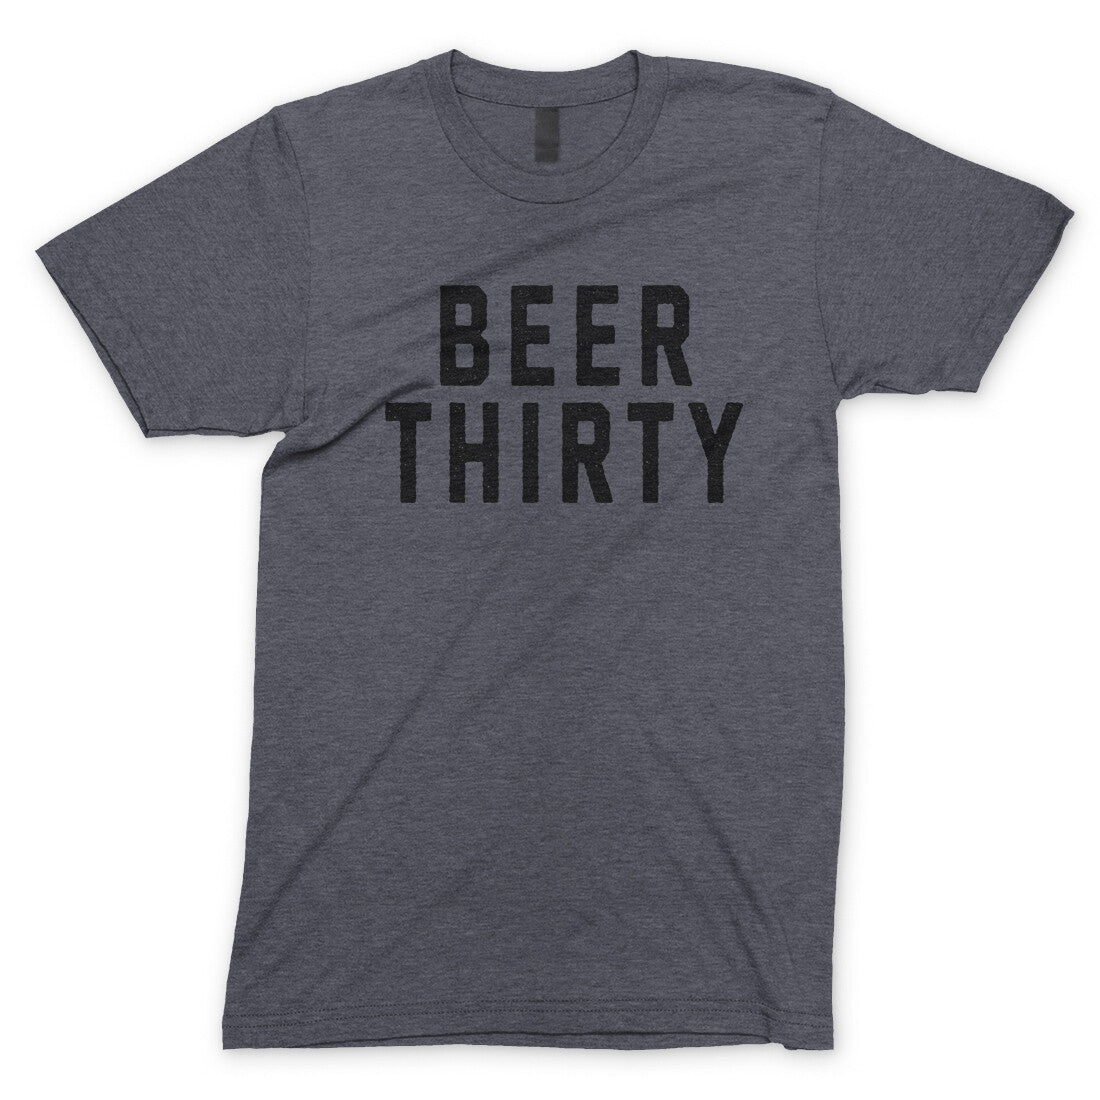 Beer Thirty in Dark Heather Color